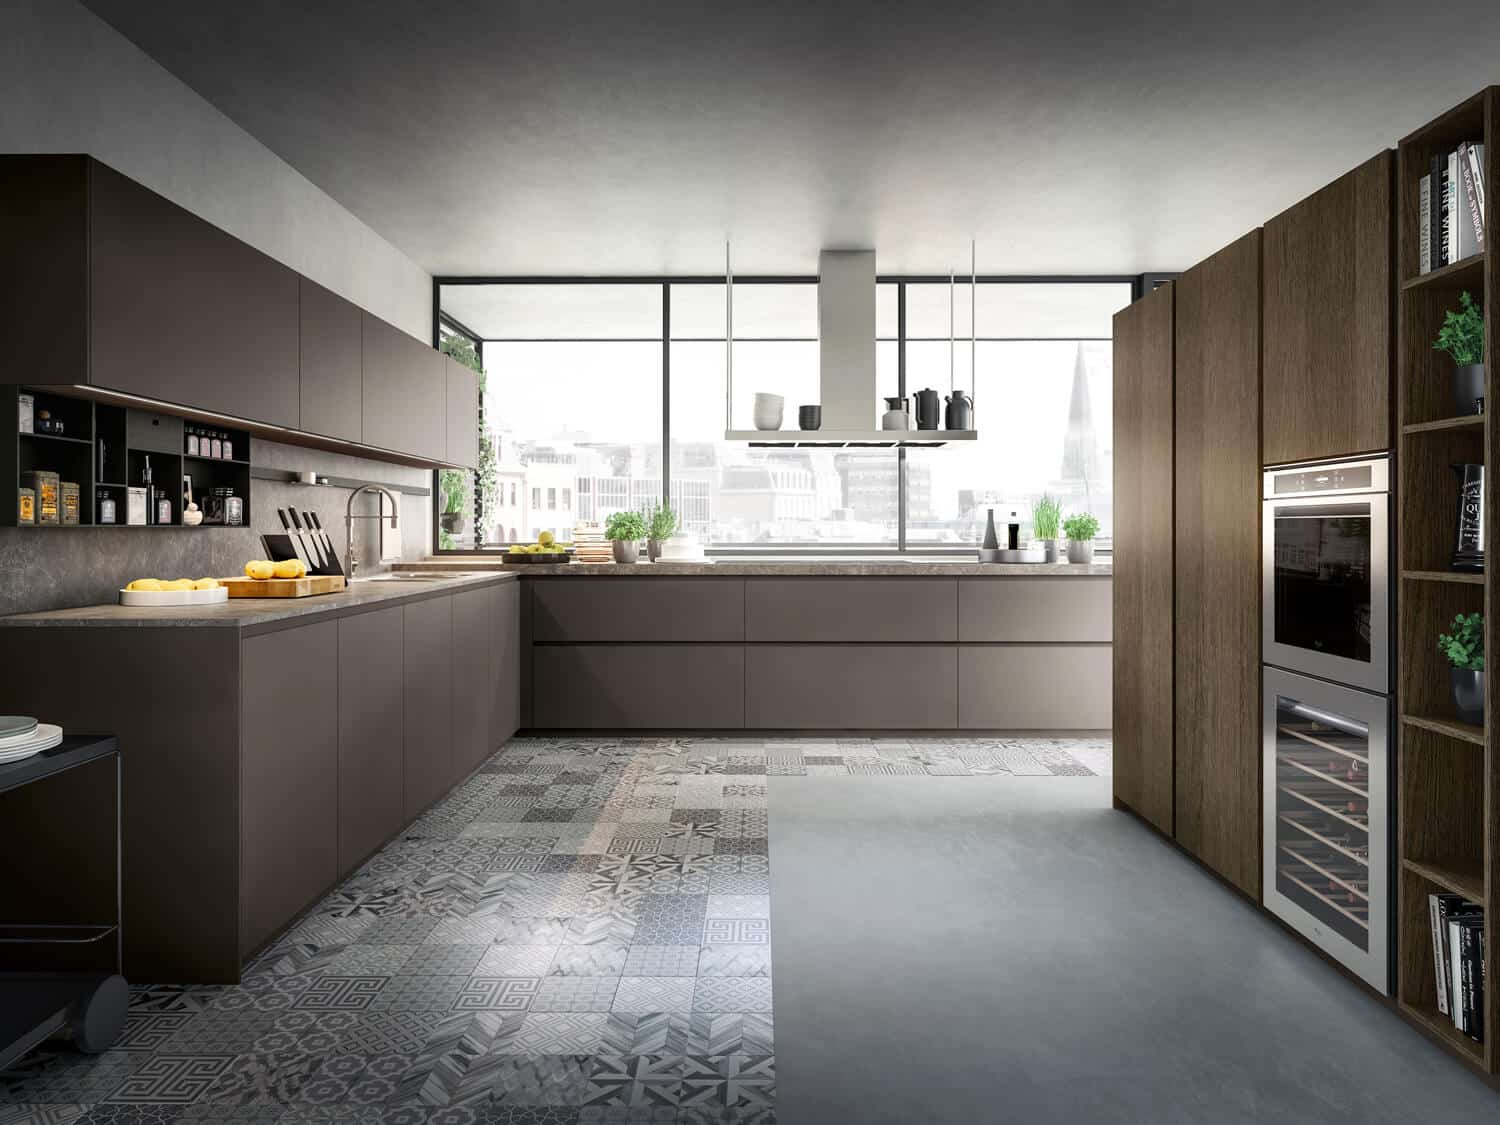 Luxury kitchen cabinets in Grigio Metro matte lacquer and Caffè wood veneer.